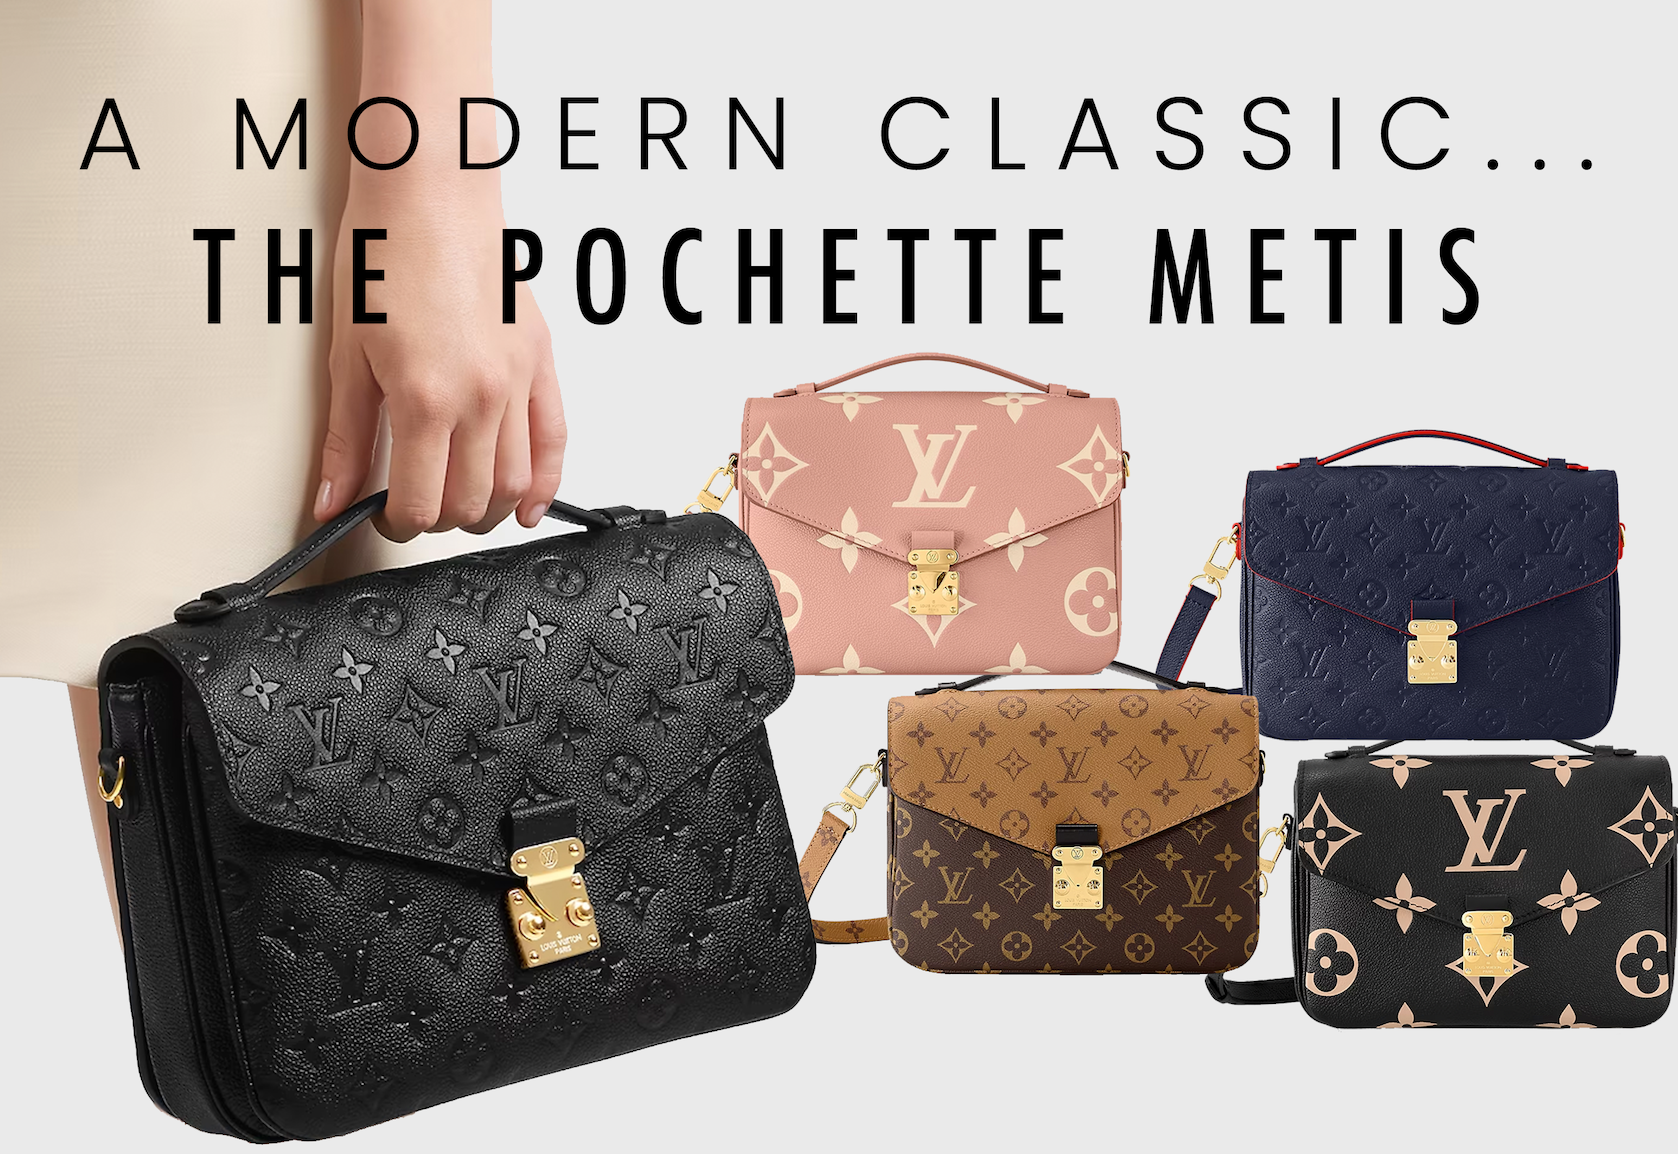 The Louis Vuitton Pochette Metis